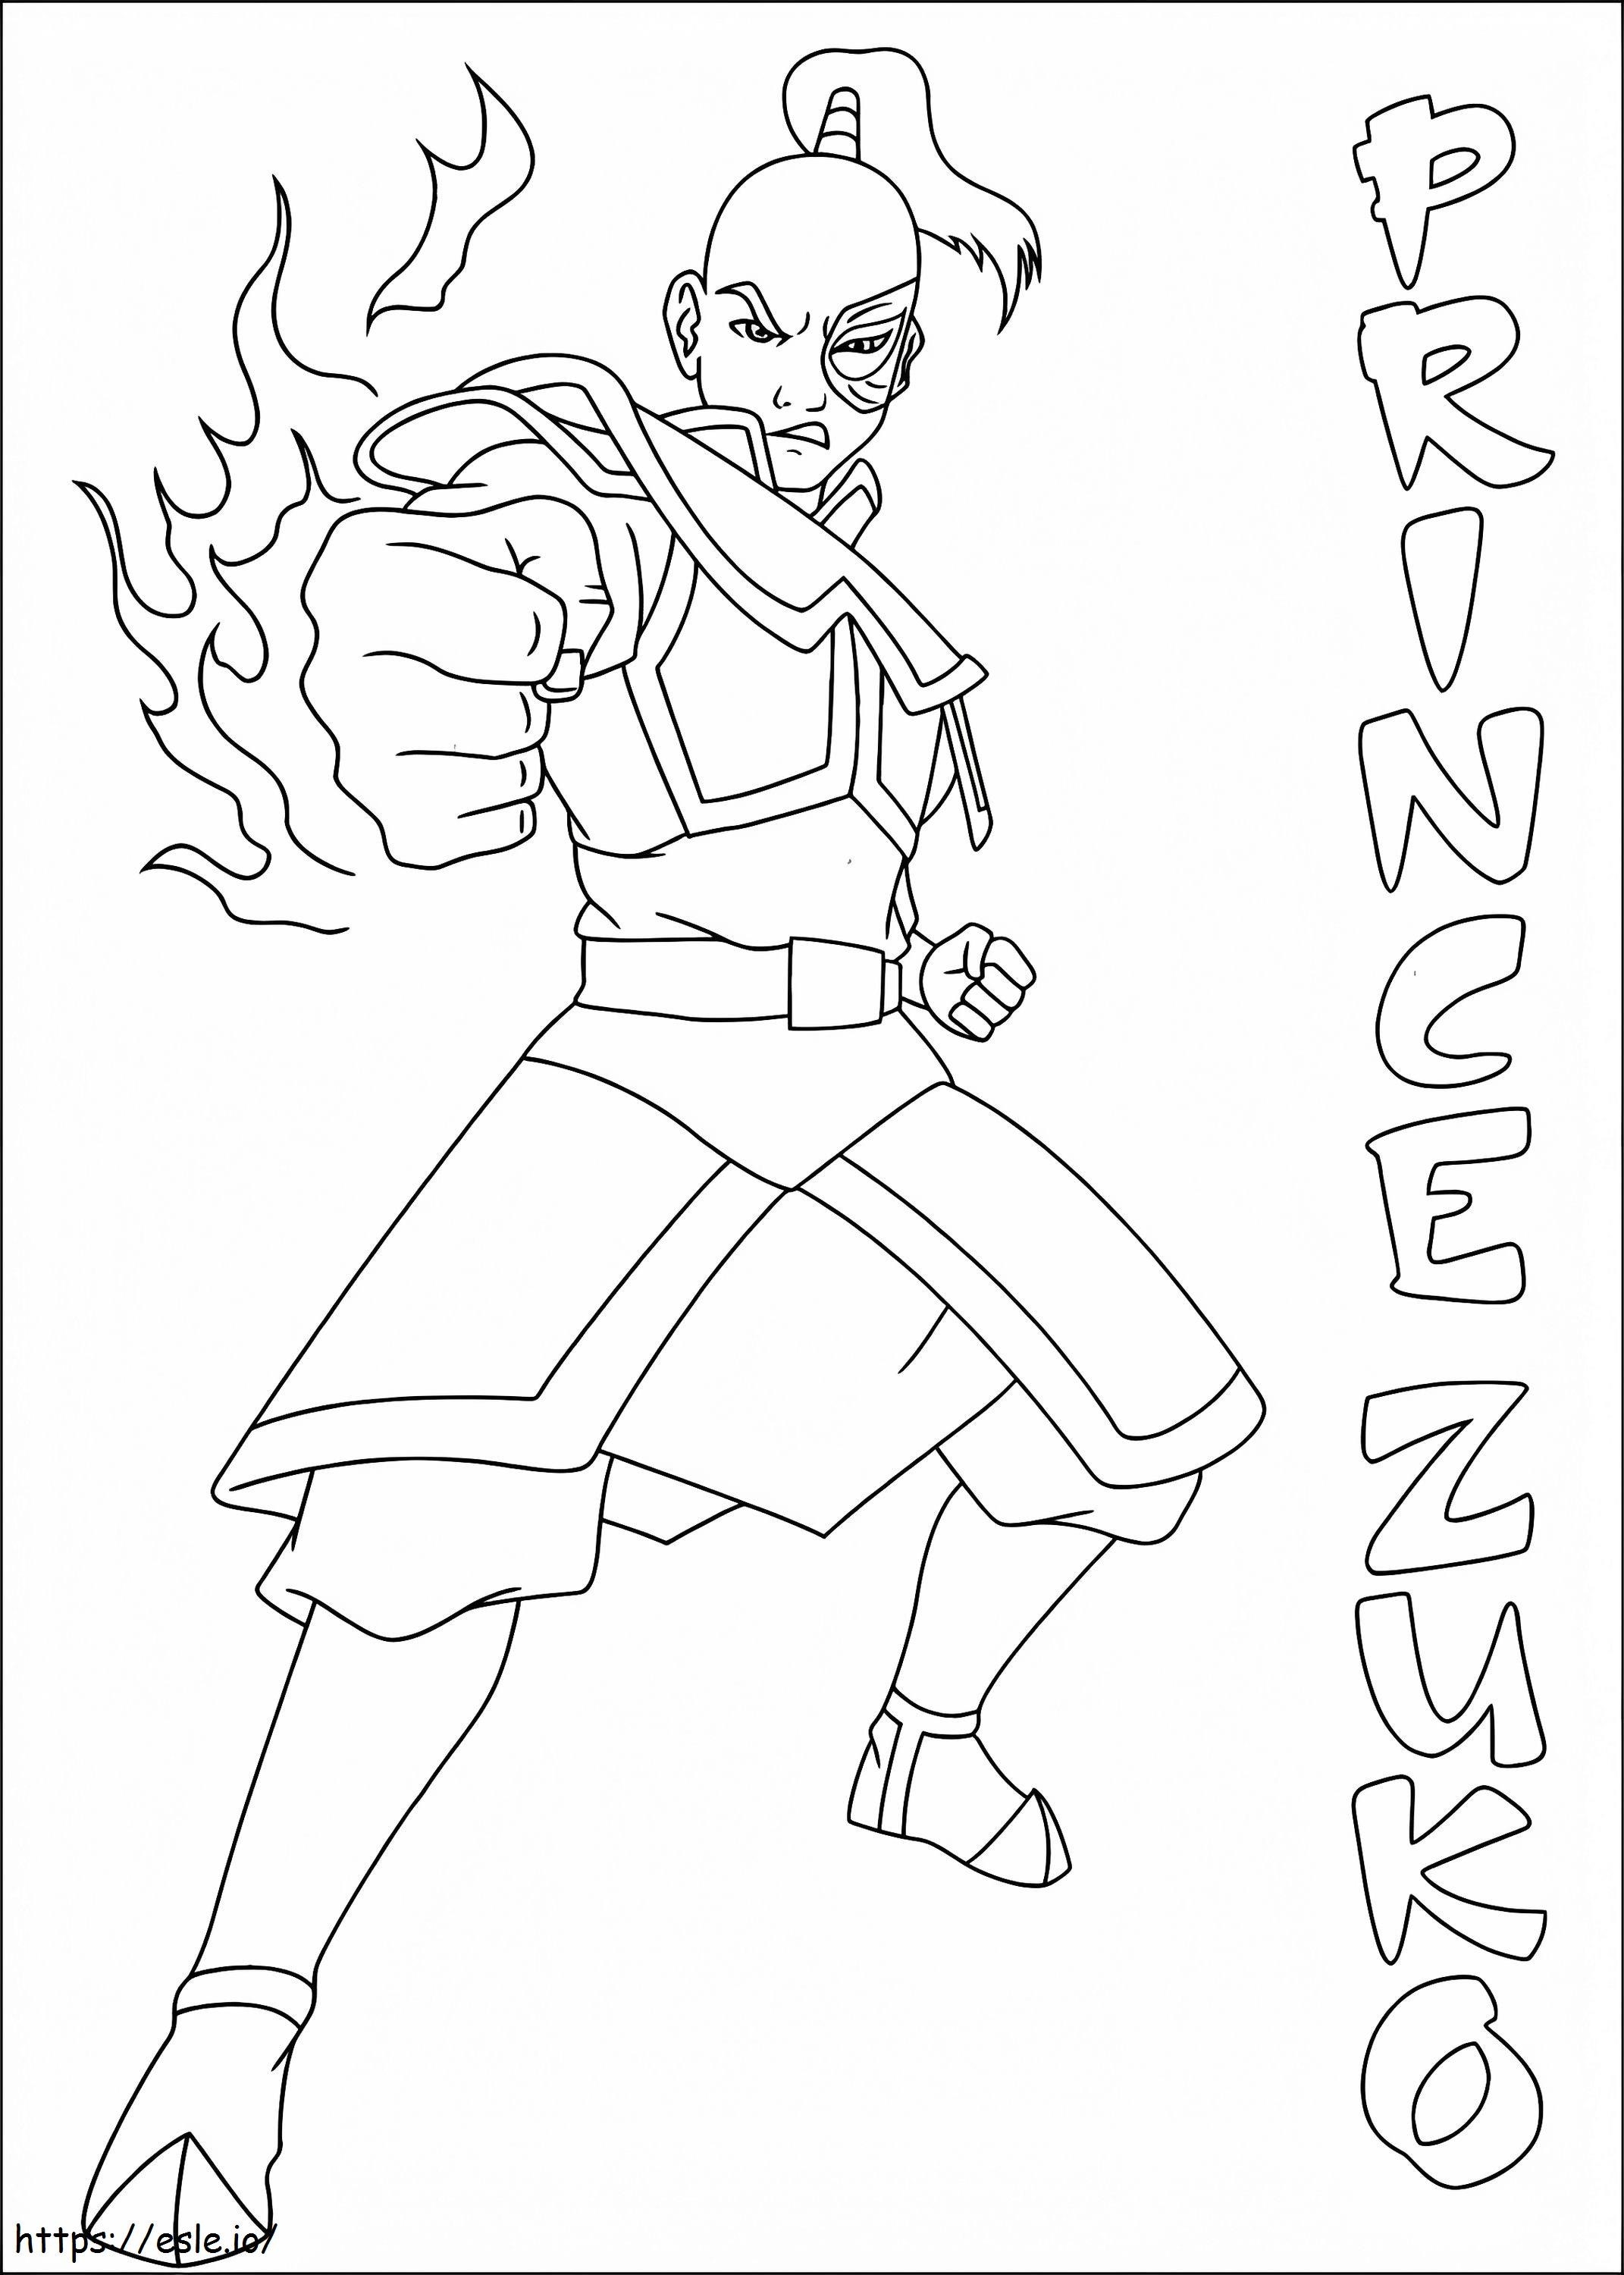 Prince zuko a coloring page